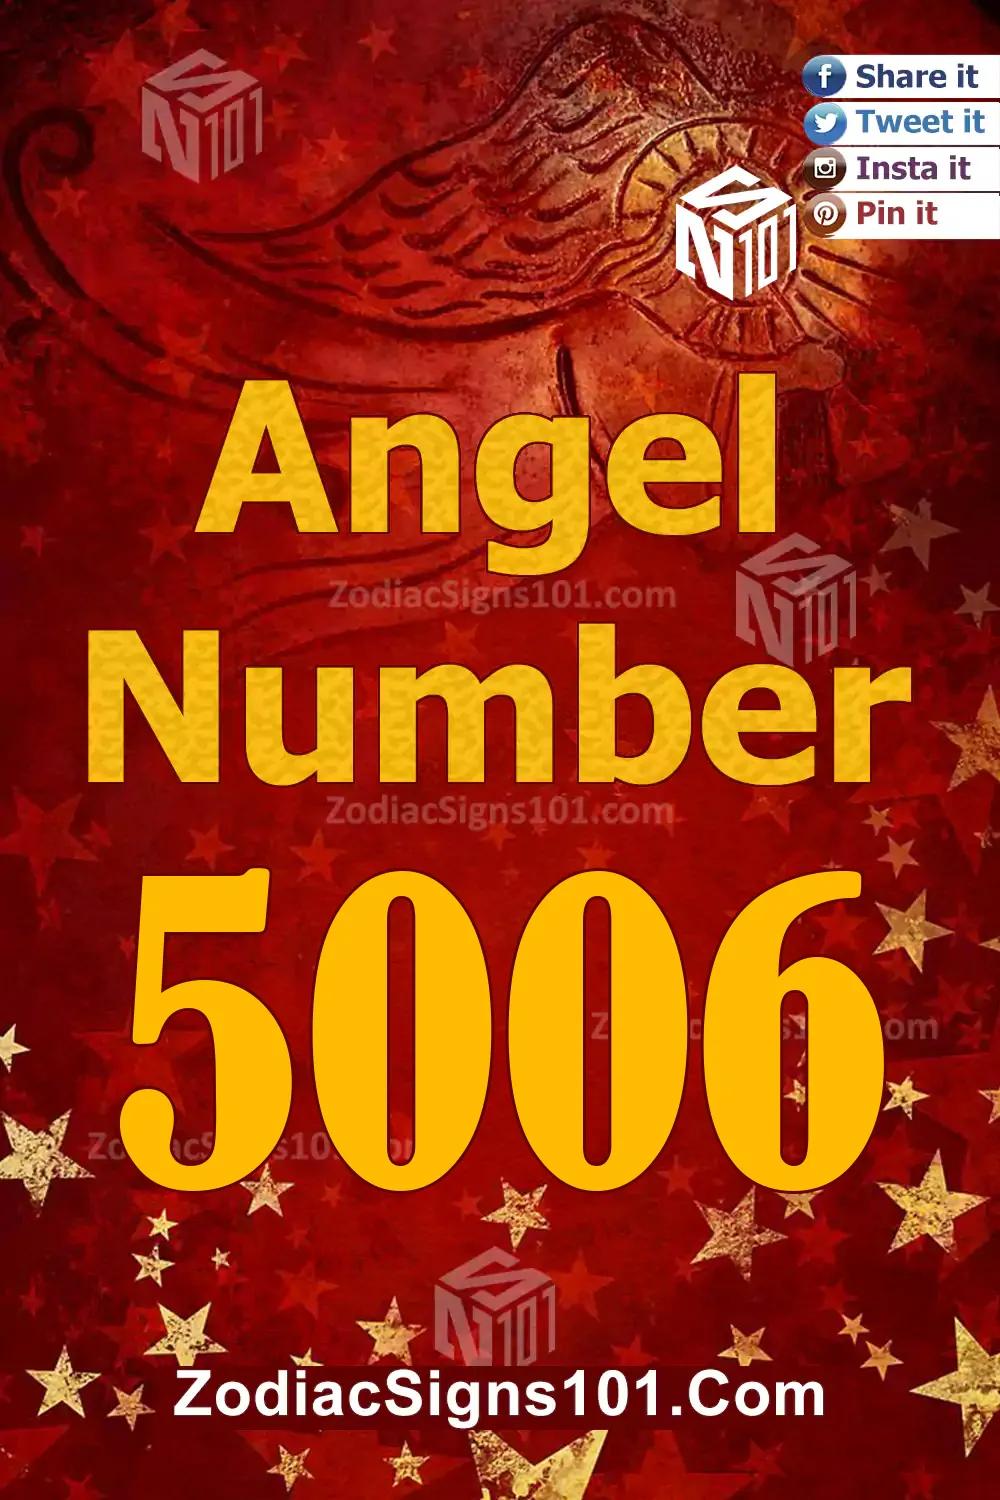 5006-Angel-Number-Meaning.jpg